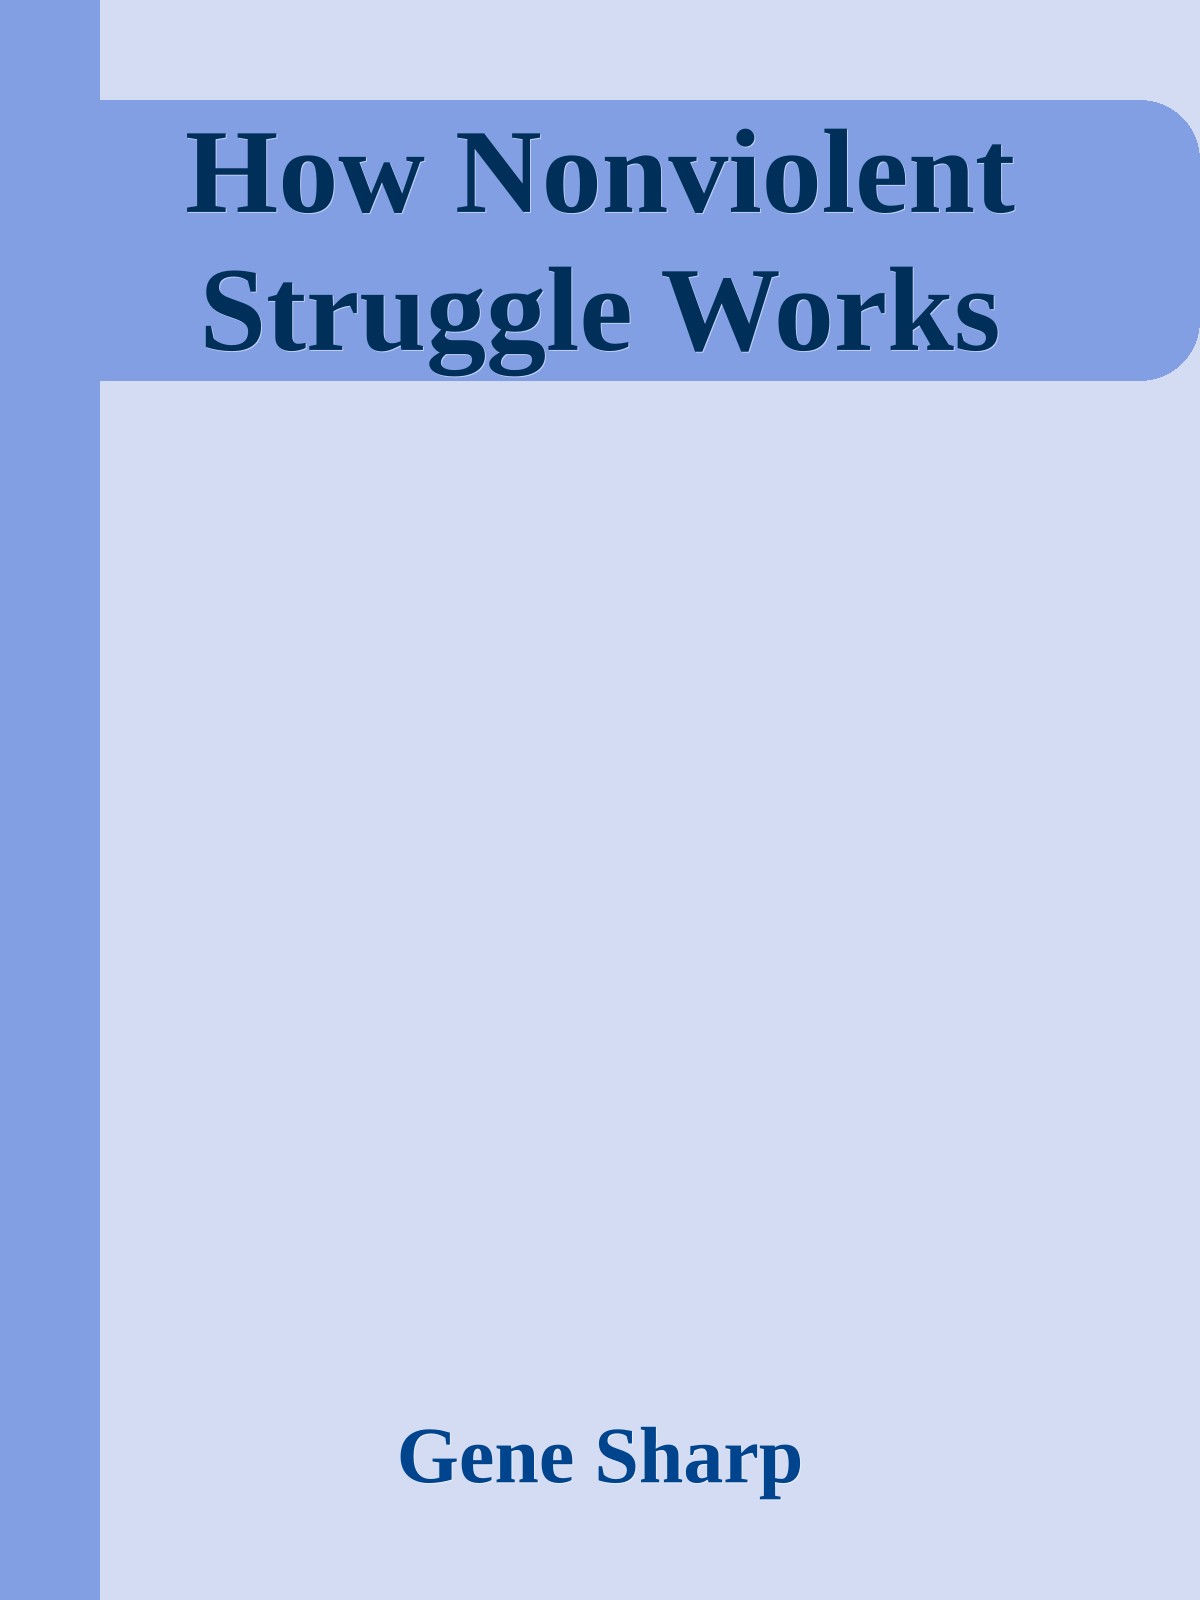 How Nonviolent Struggle Works (2013) by Gene Sharp